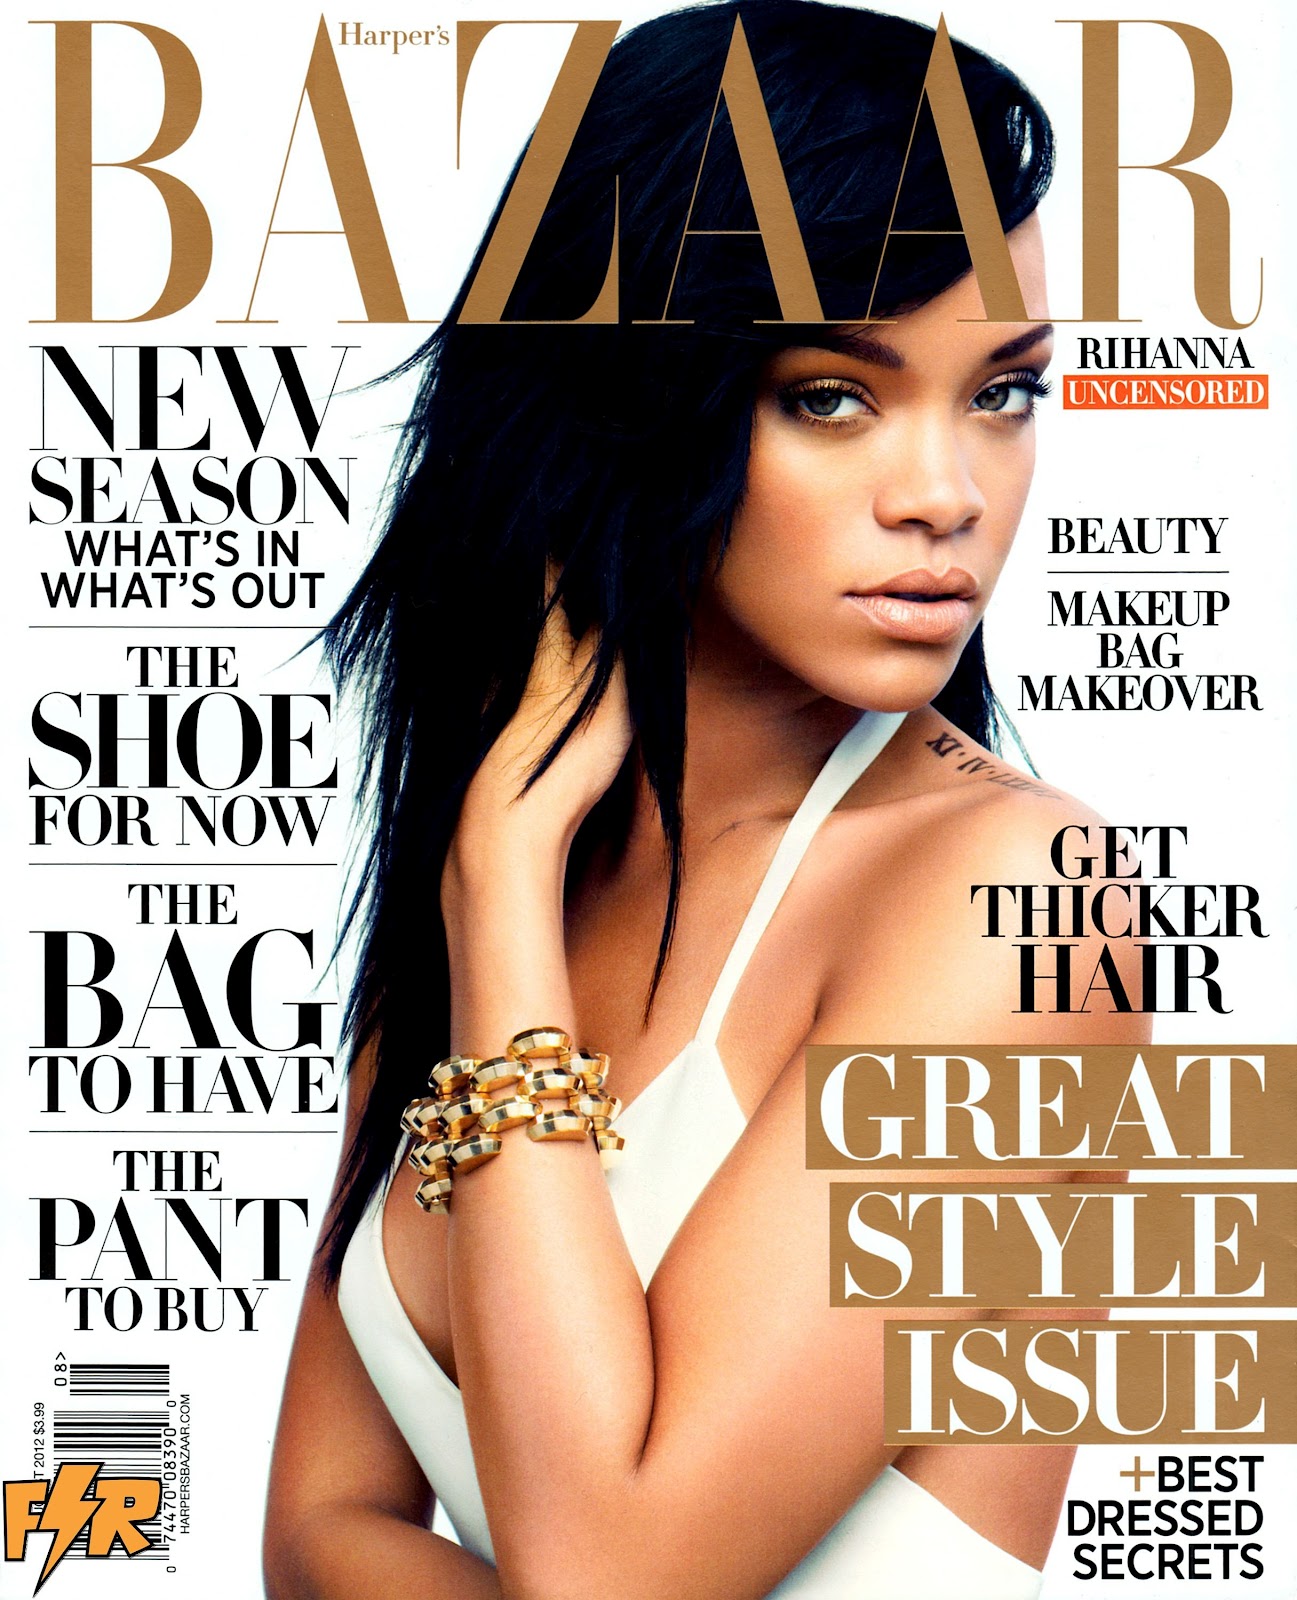 https://blogger.googleusercontent.com/img/b/R29vZ2xl/AVvXsEgcDpoO3FqNjzSstkDb7g0cPOiTp9UxQzBB6iDKrlRgwNCWsQnp14fVf1Jk1iwzEC77dCT3trdfwN1dq1zHzXH1875wgpf6iYsnYdL1Us4srRTcZtqhYfXKTF3zgE1QHt2gtI9M5d_jzvJ_/s1600/Rihanna++Covers+Harper%27s+Bazaar+Magazine+August+2012+Issue+-01.jpg